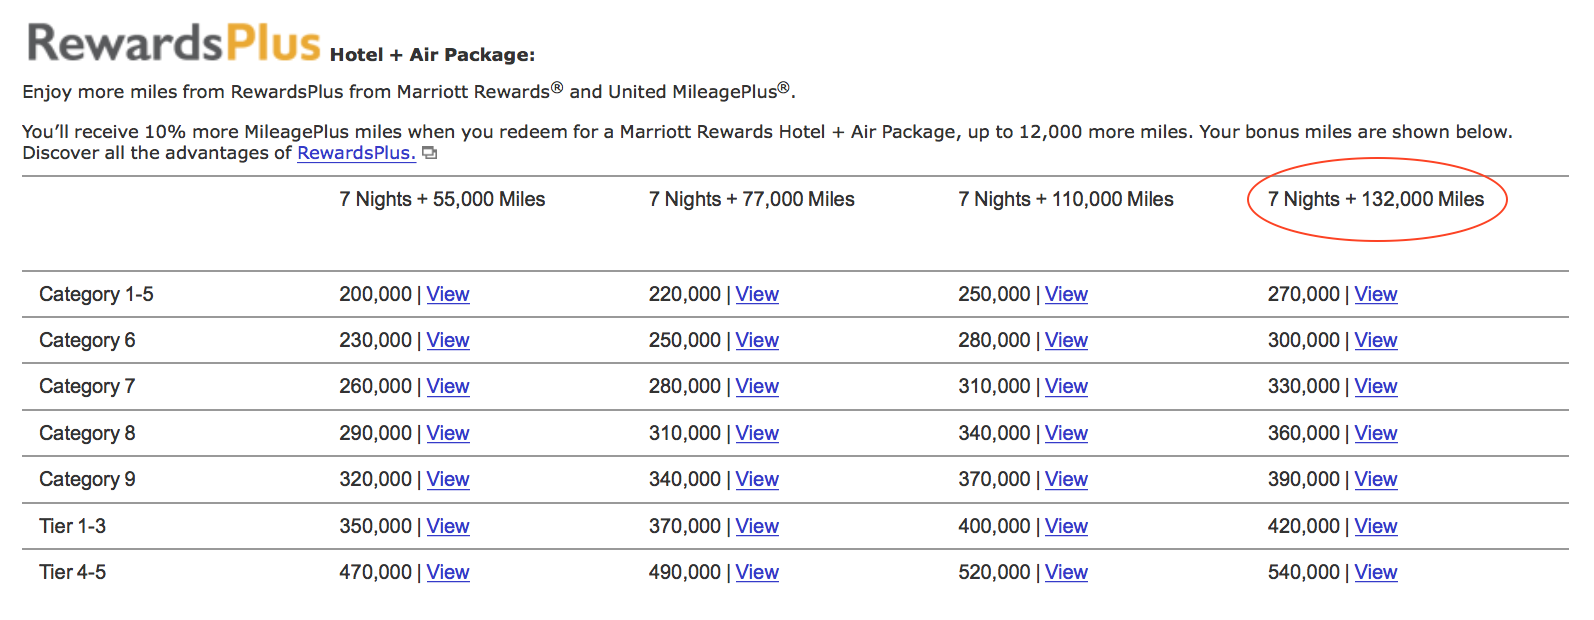 marriott-united-airlines-nights-flights-hotel-air